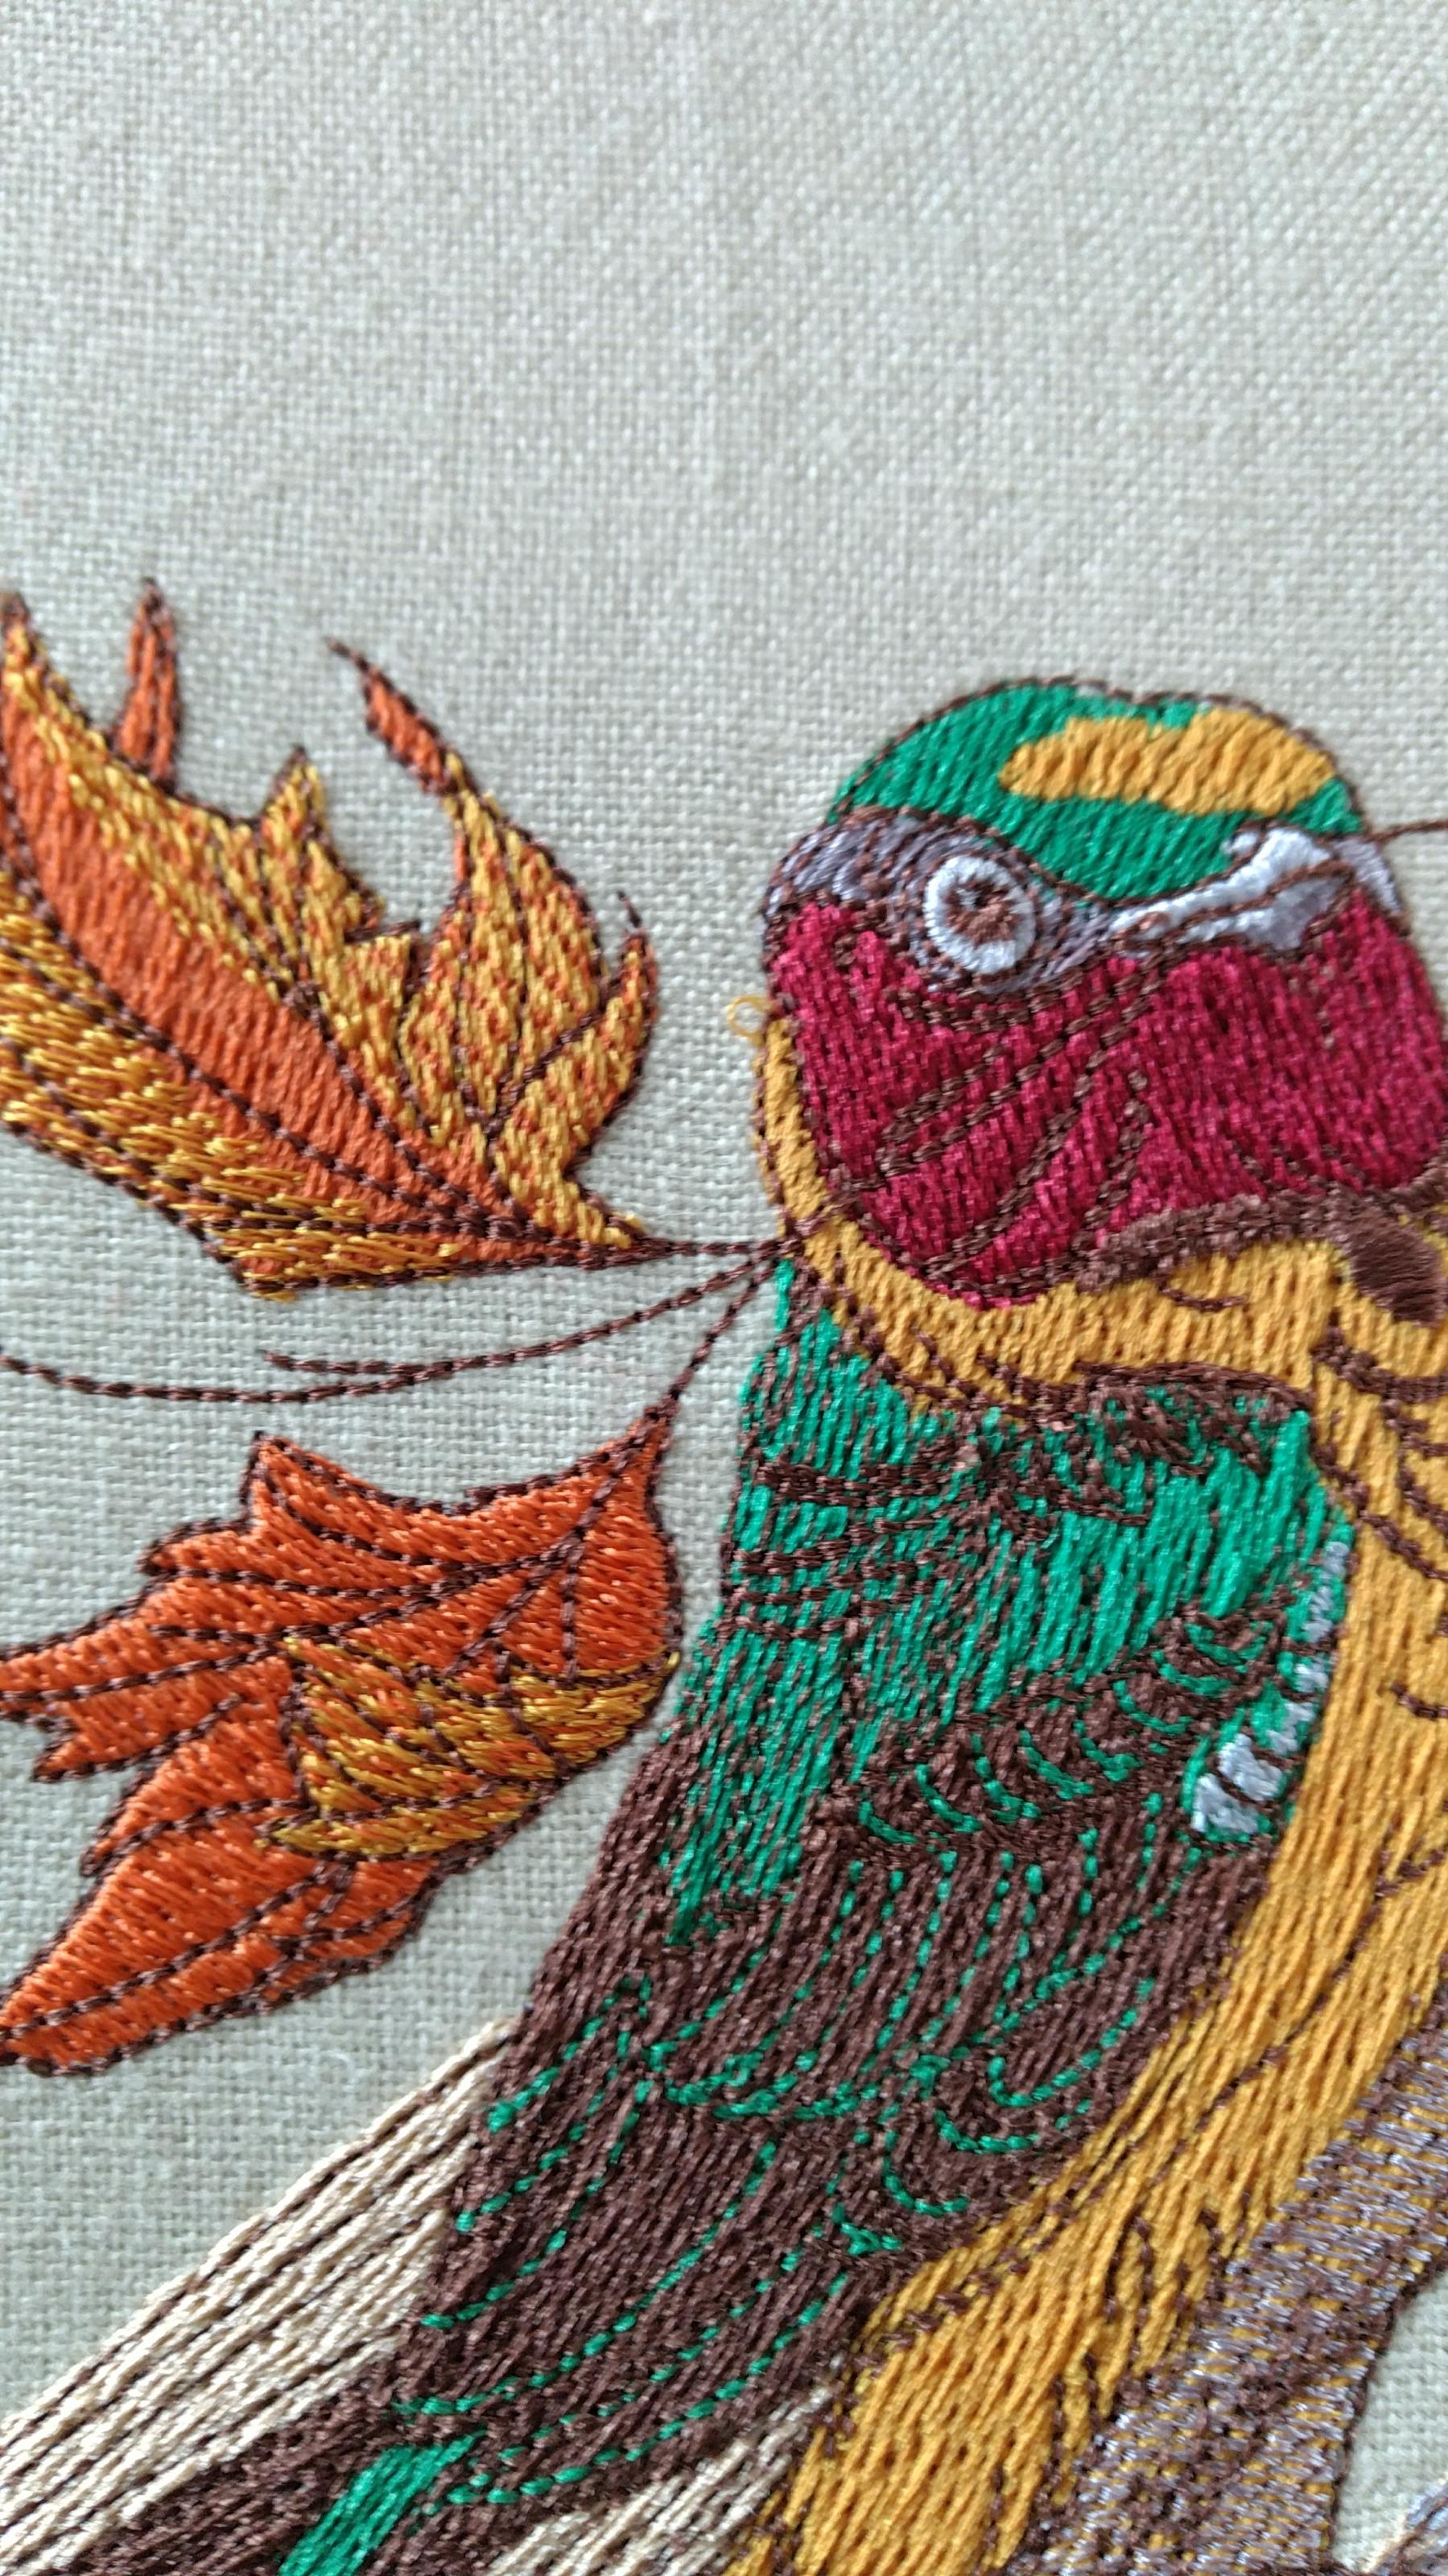 Fragment of Siberian rubythroat embroidery design